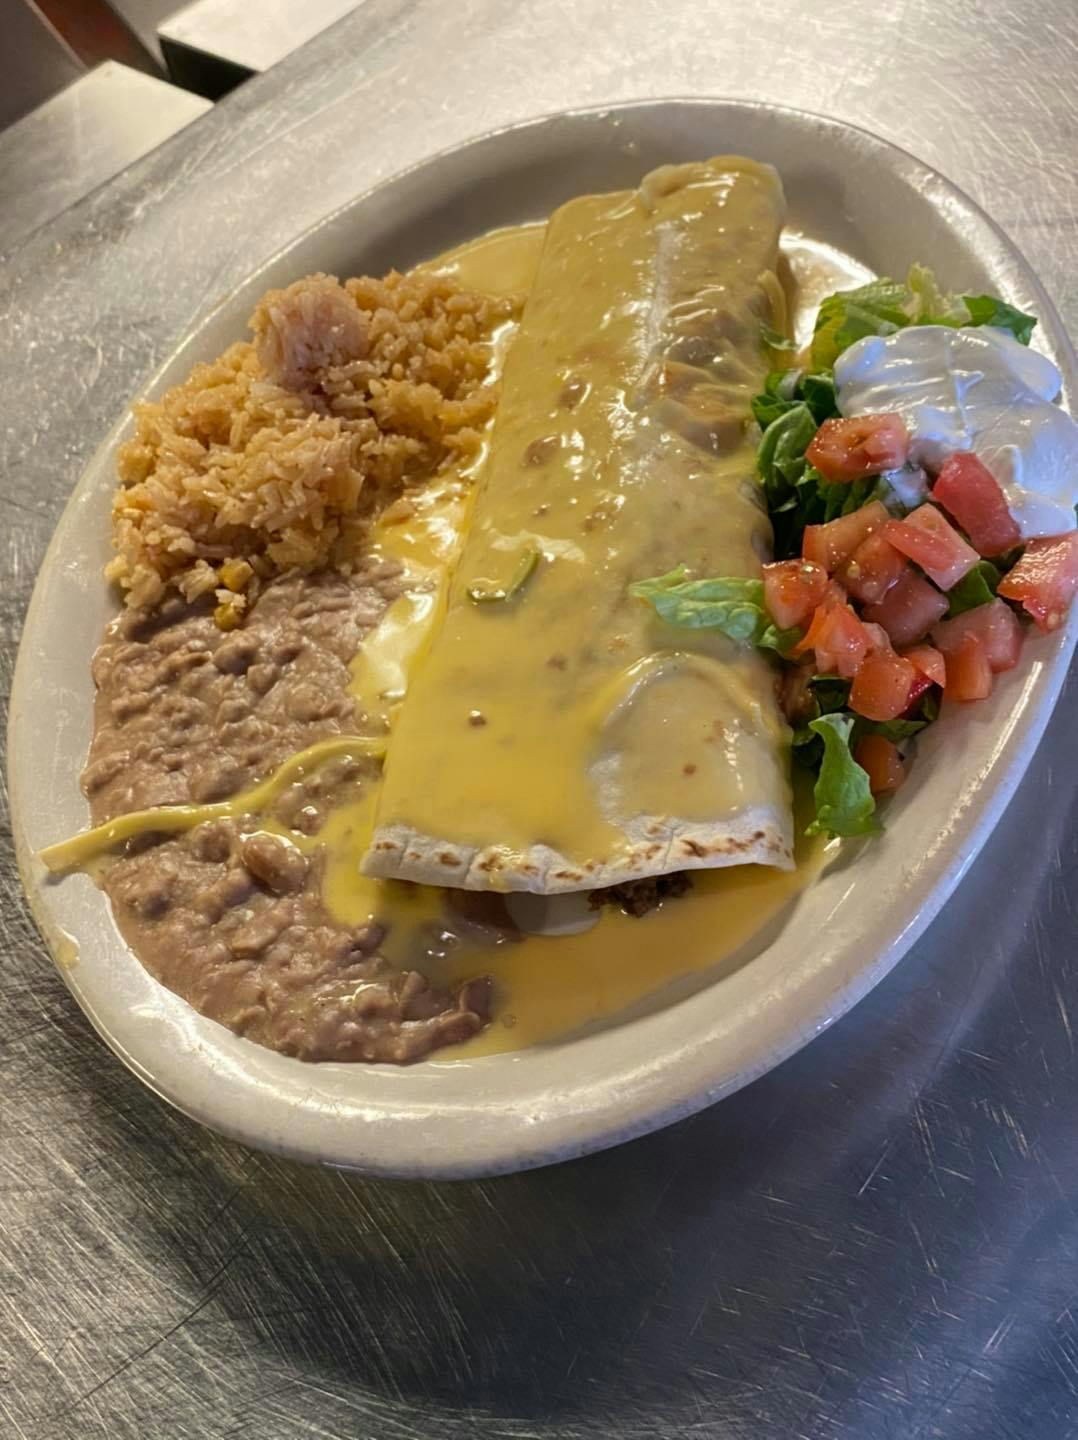 Burrito el grande plate